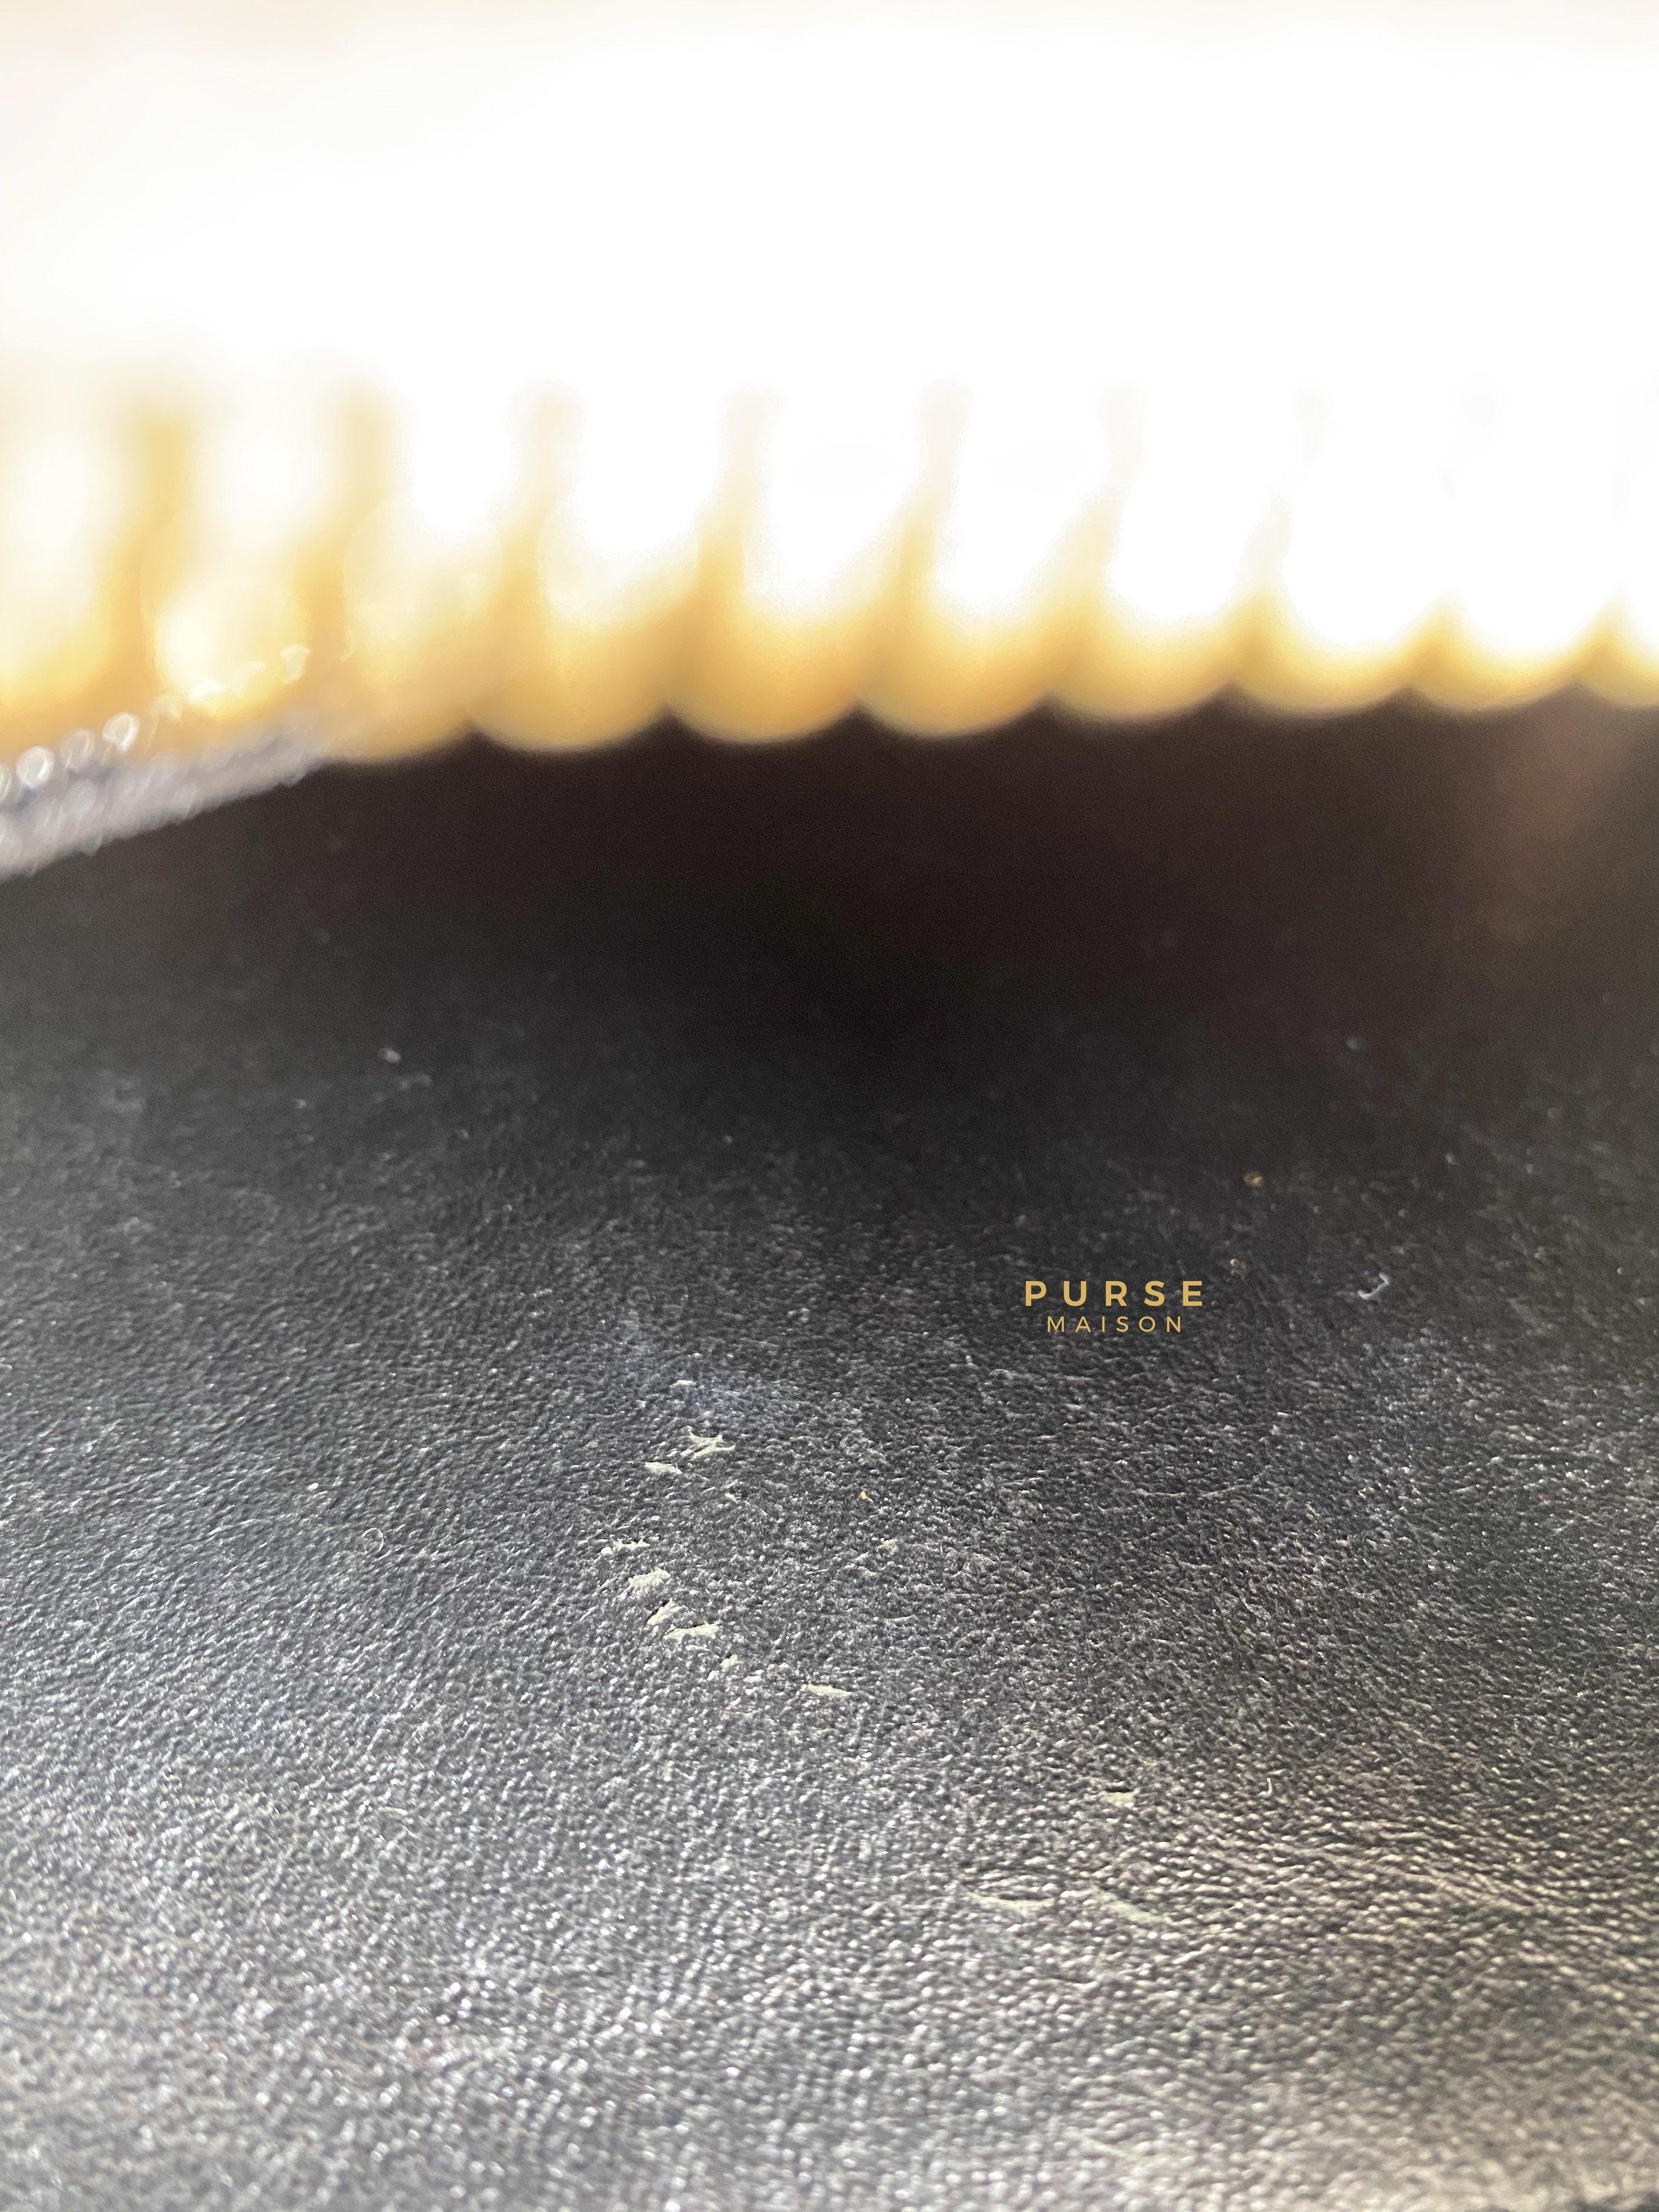 Chanel CC Filigree Medium Vanity Bag Beige/Black Caviar Leather in Aged Gold Hardware Series 24 | Purse Maison Luxury Bags Shop